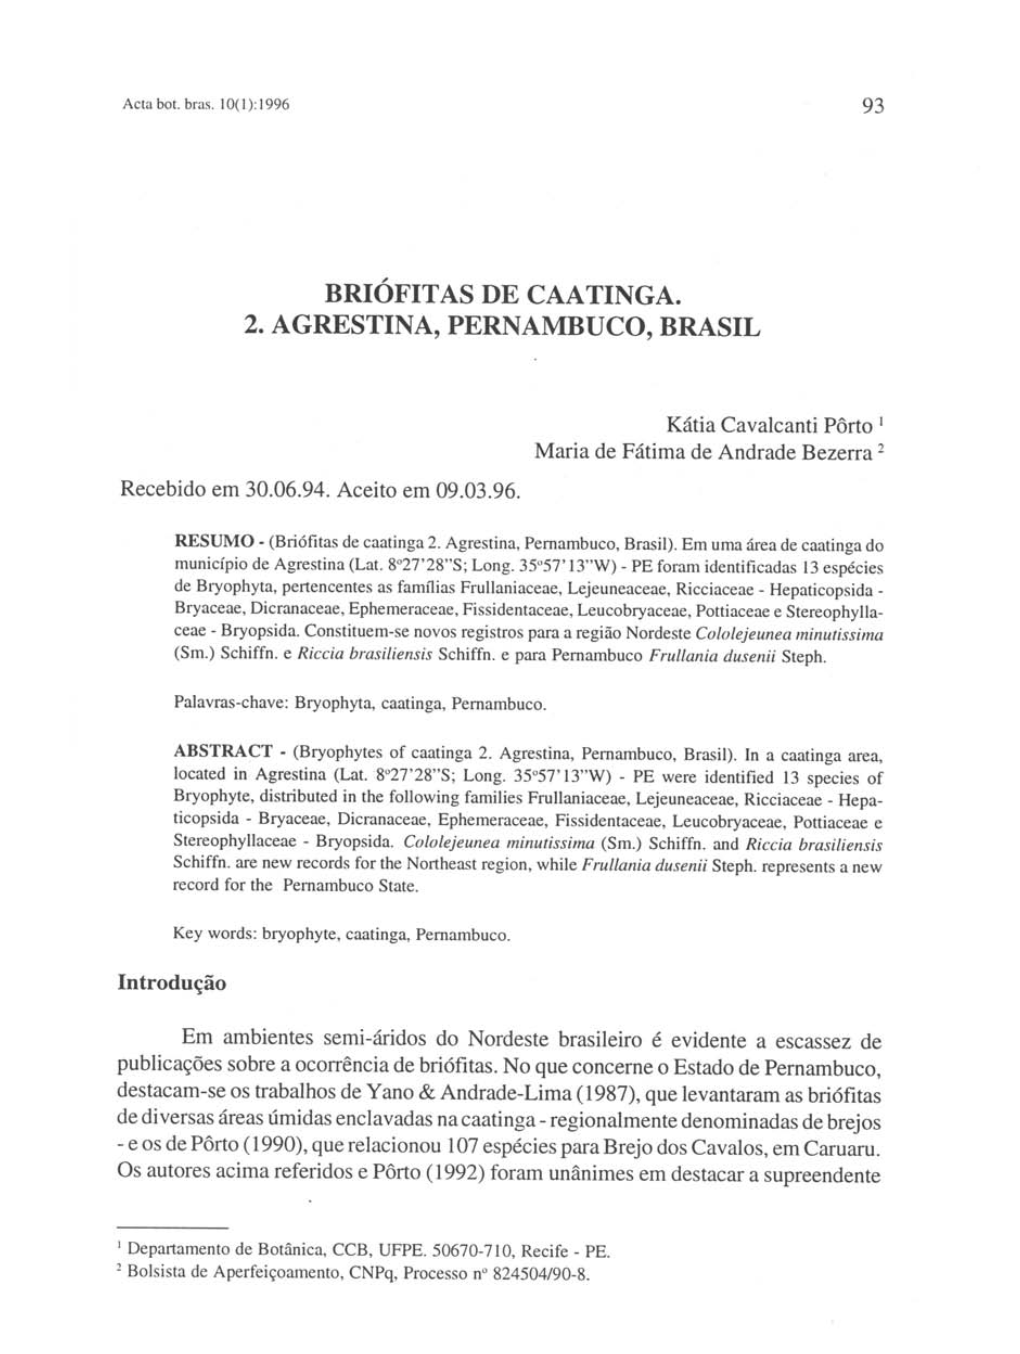 Briófitas De Caatinga. 2. Agrestina, Pernambuco, Brasil